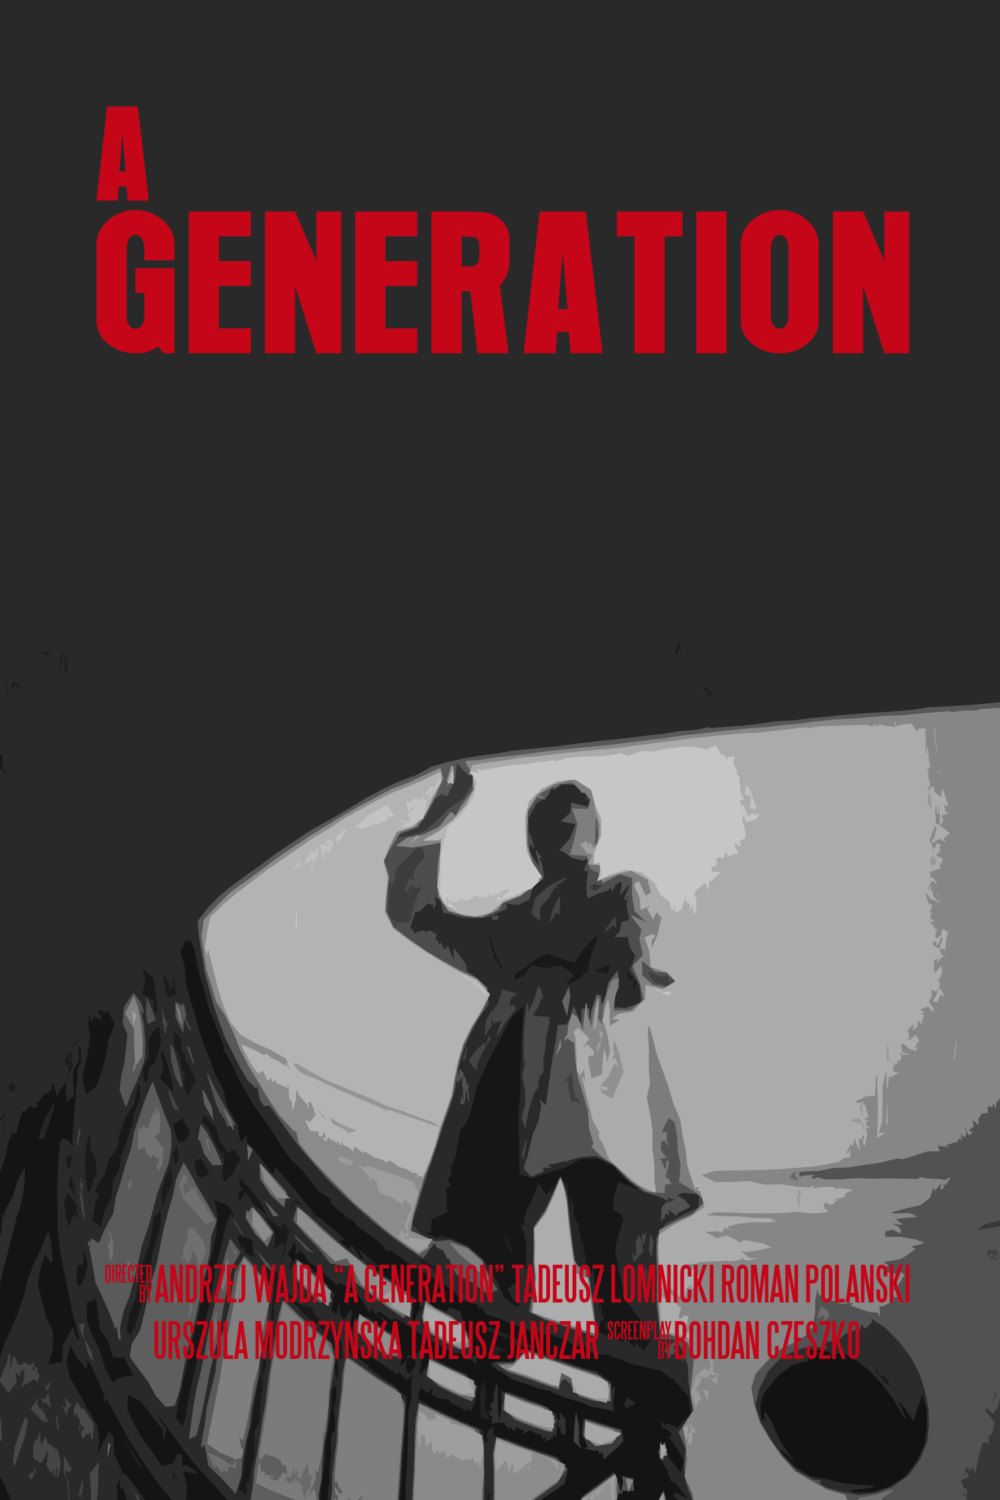 "A Generation" (1955)